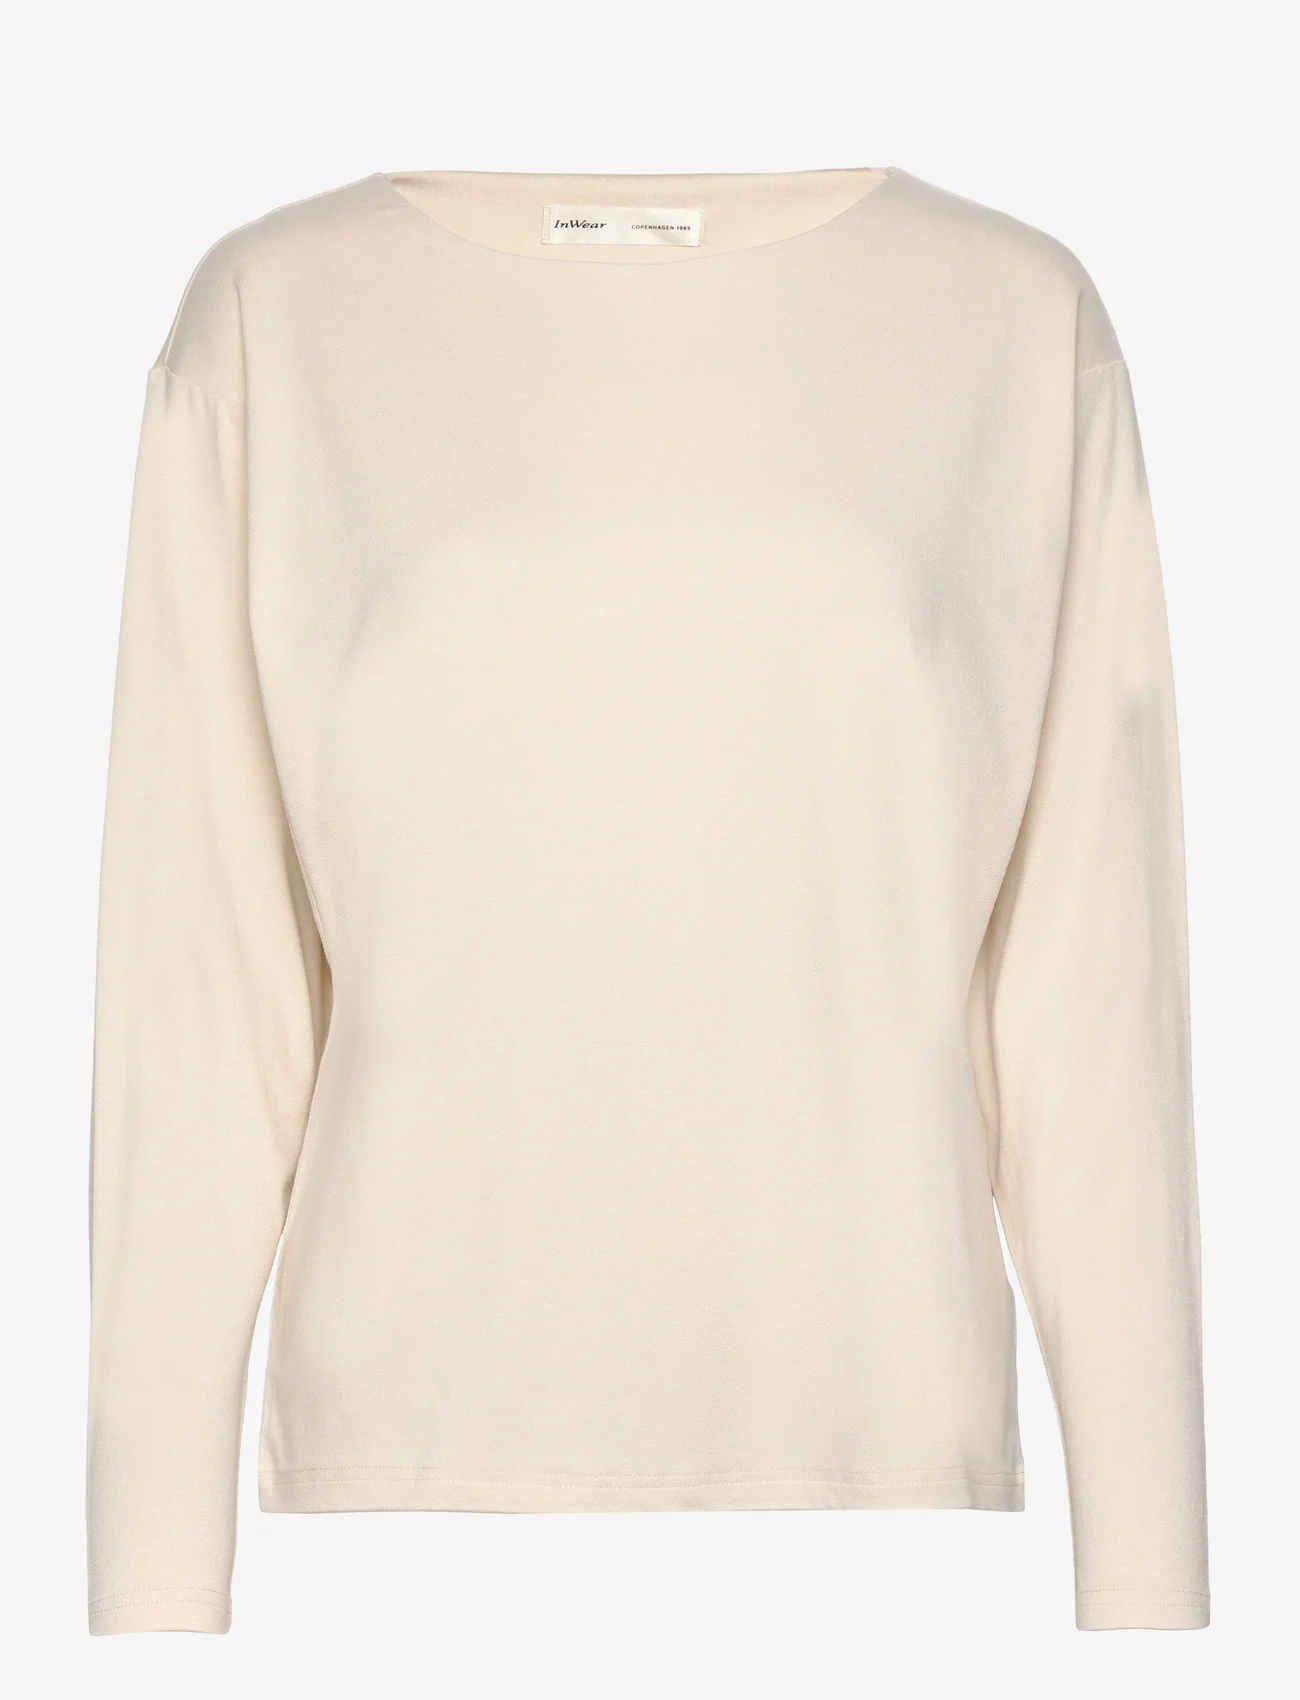 InWear - GrinnyIW Top - long-sleeved blouses - vanilla - 0